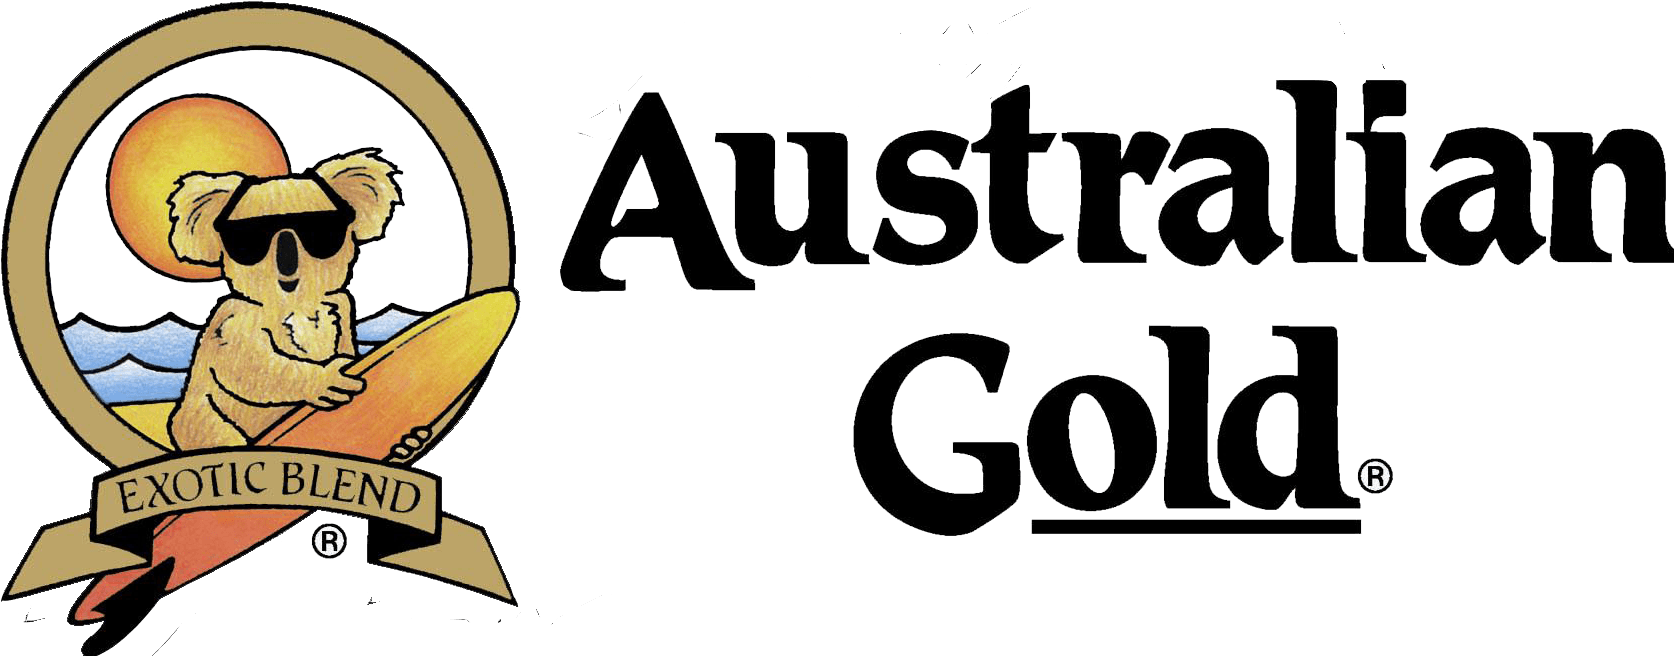 Australian Gold Logo - Australian-gold-logo - The Sun Factory